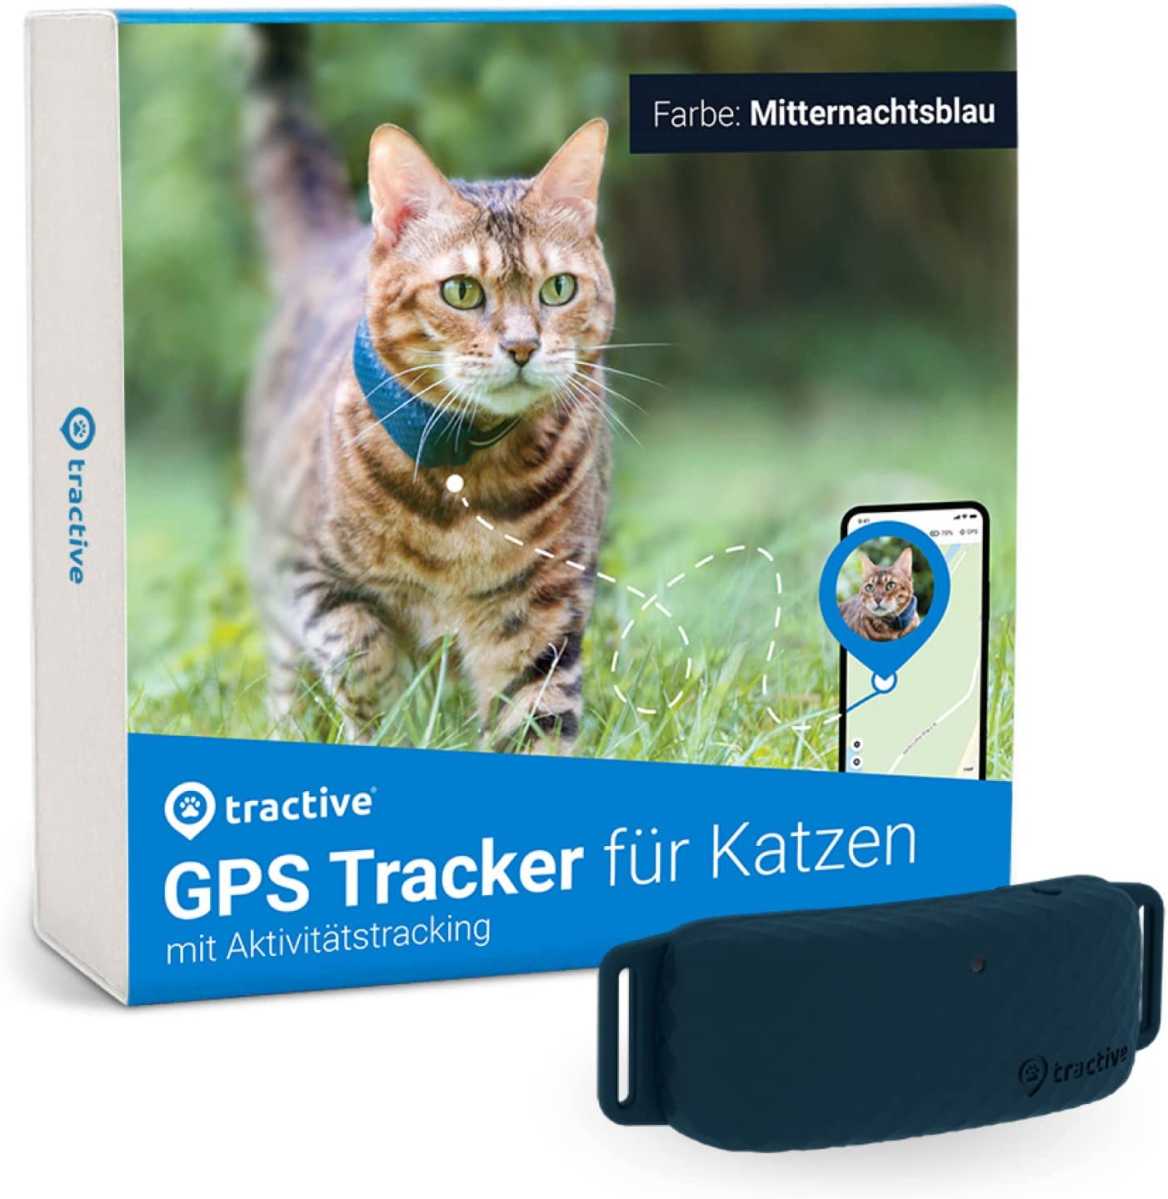 Tractive GPS Tracker for Katzen